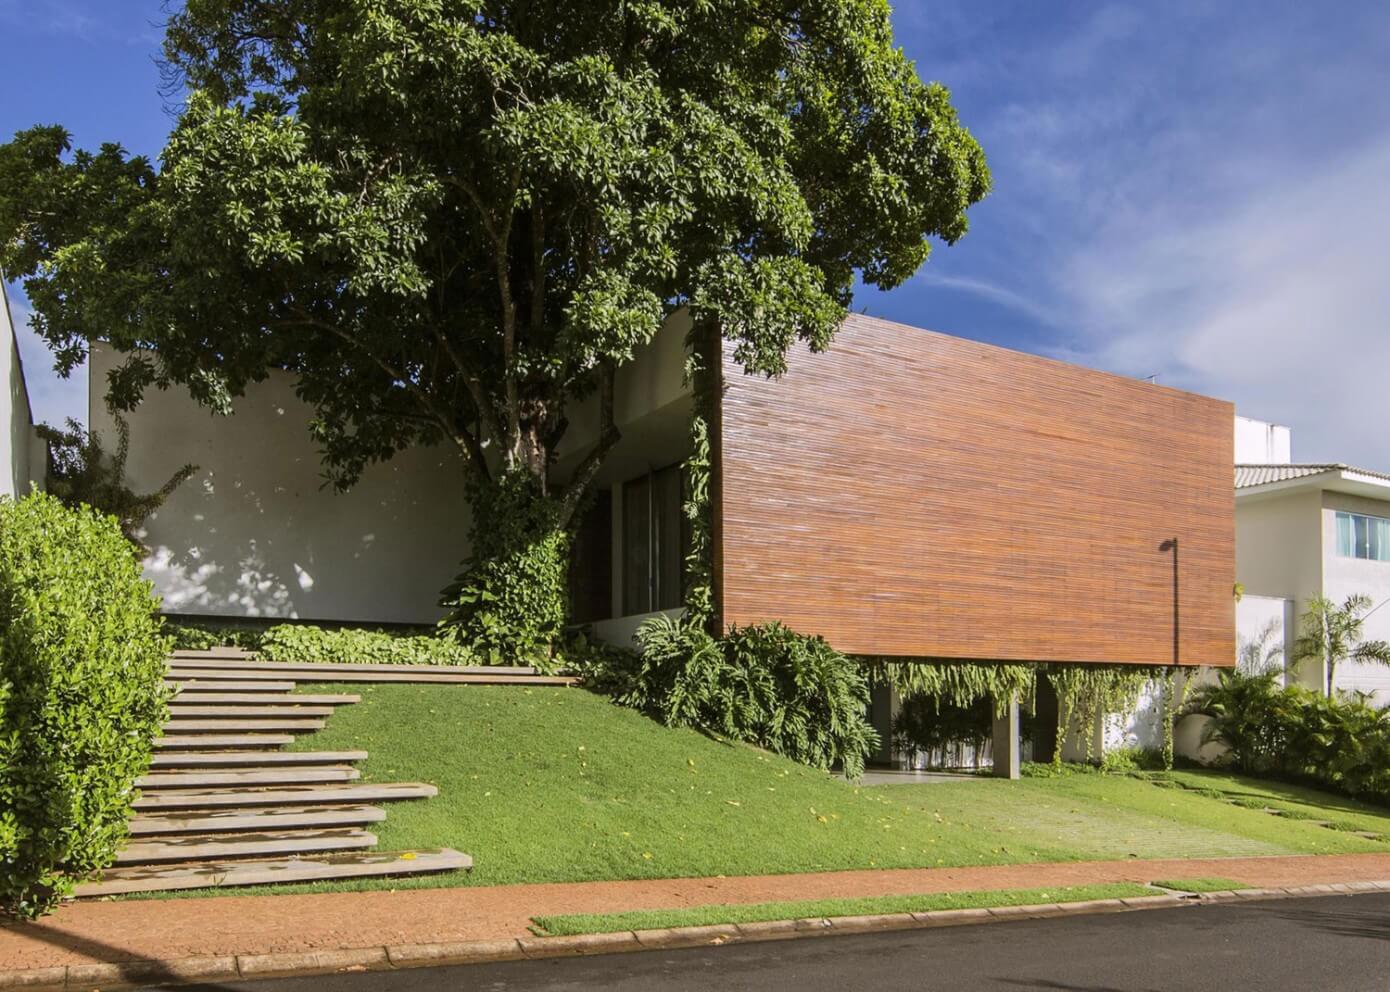 RMJ Residence by Felipe Bueno and Alexandre Bueno